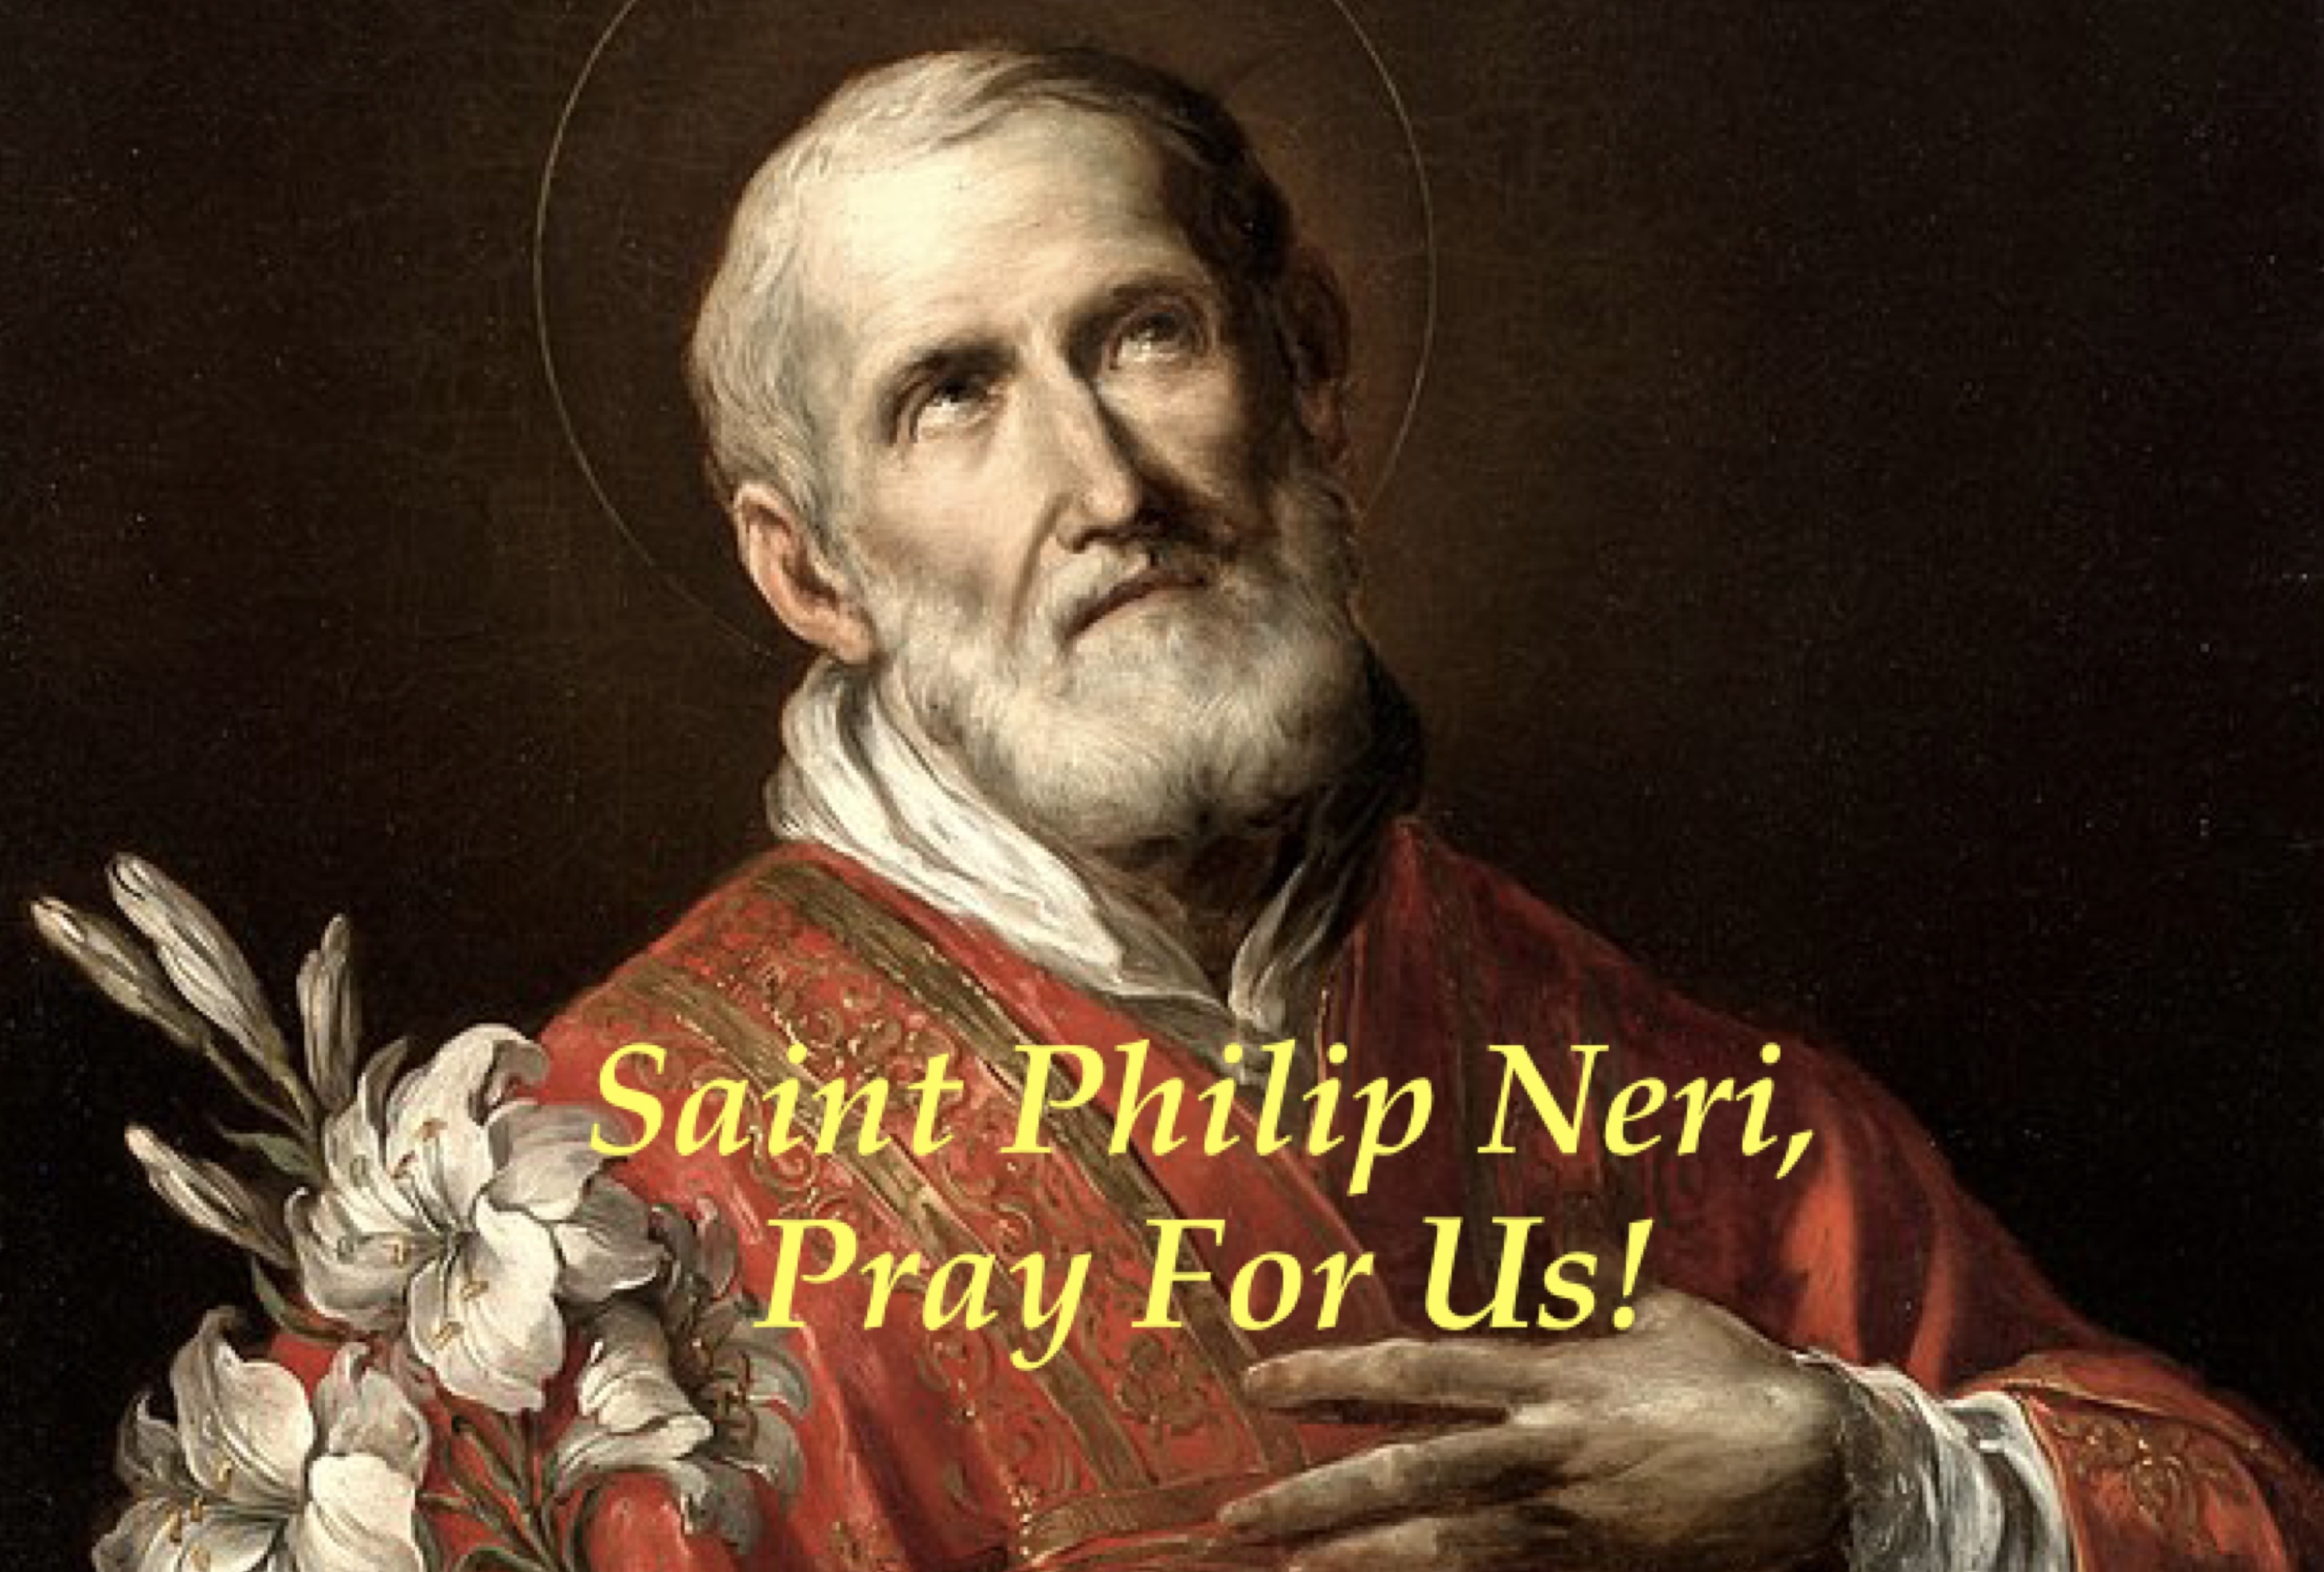 26th May - Saint Philip Neri